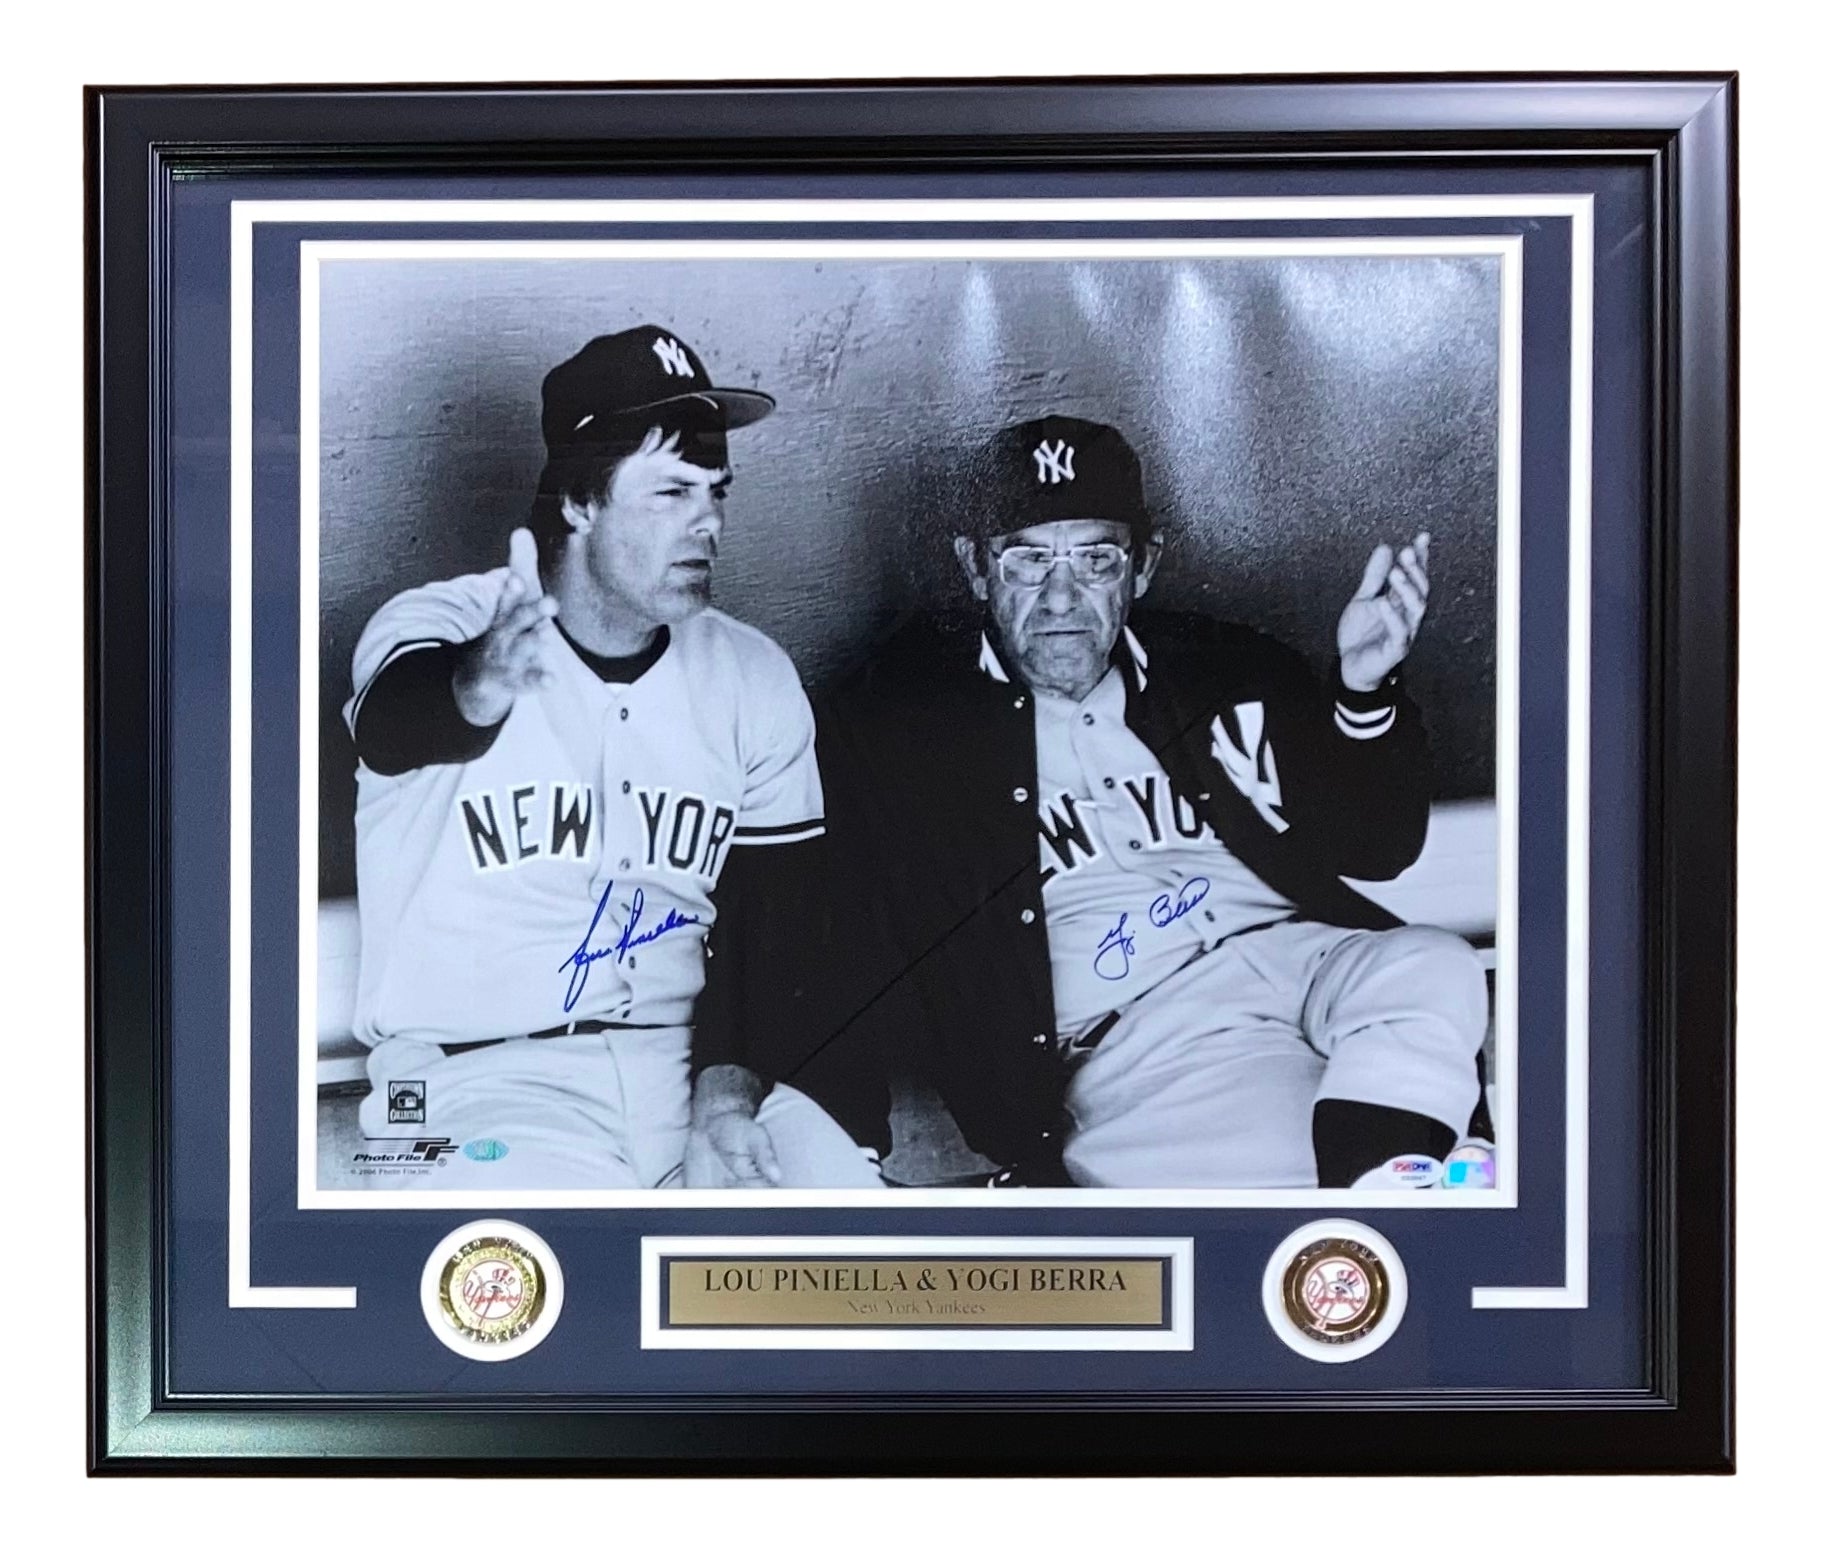 Yogi Berra - Autographed Signed Photograph